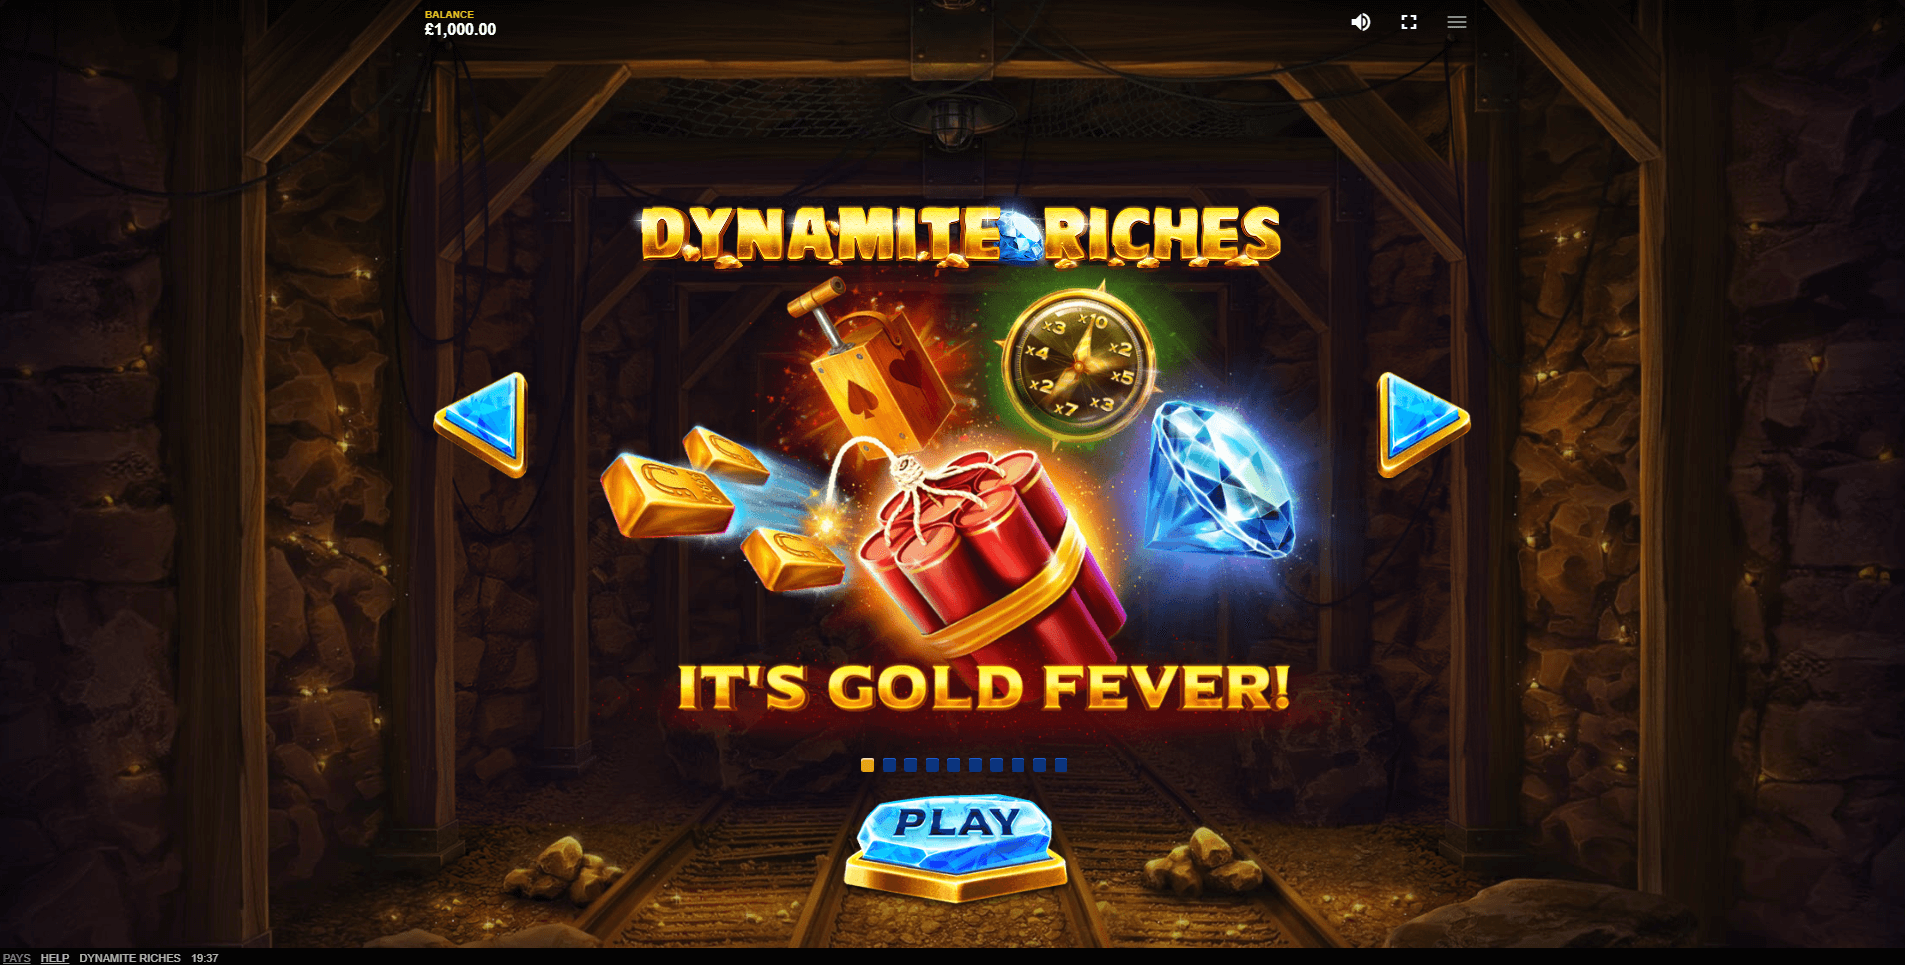 dynamite riches slot machine detail image 0